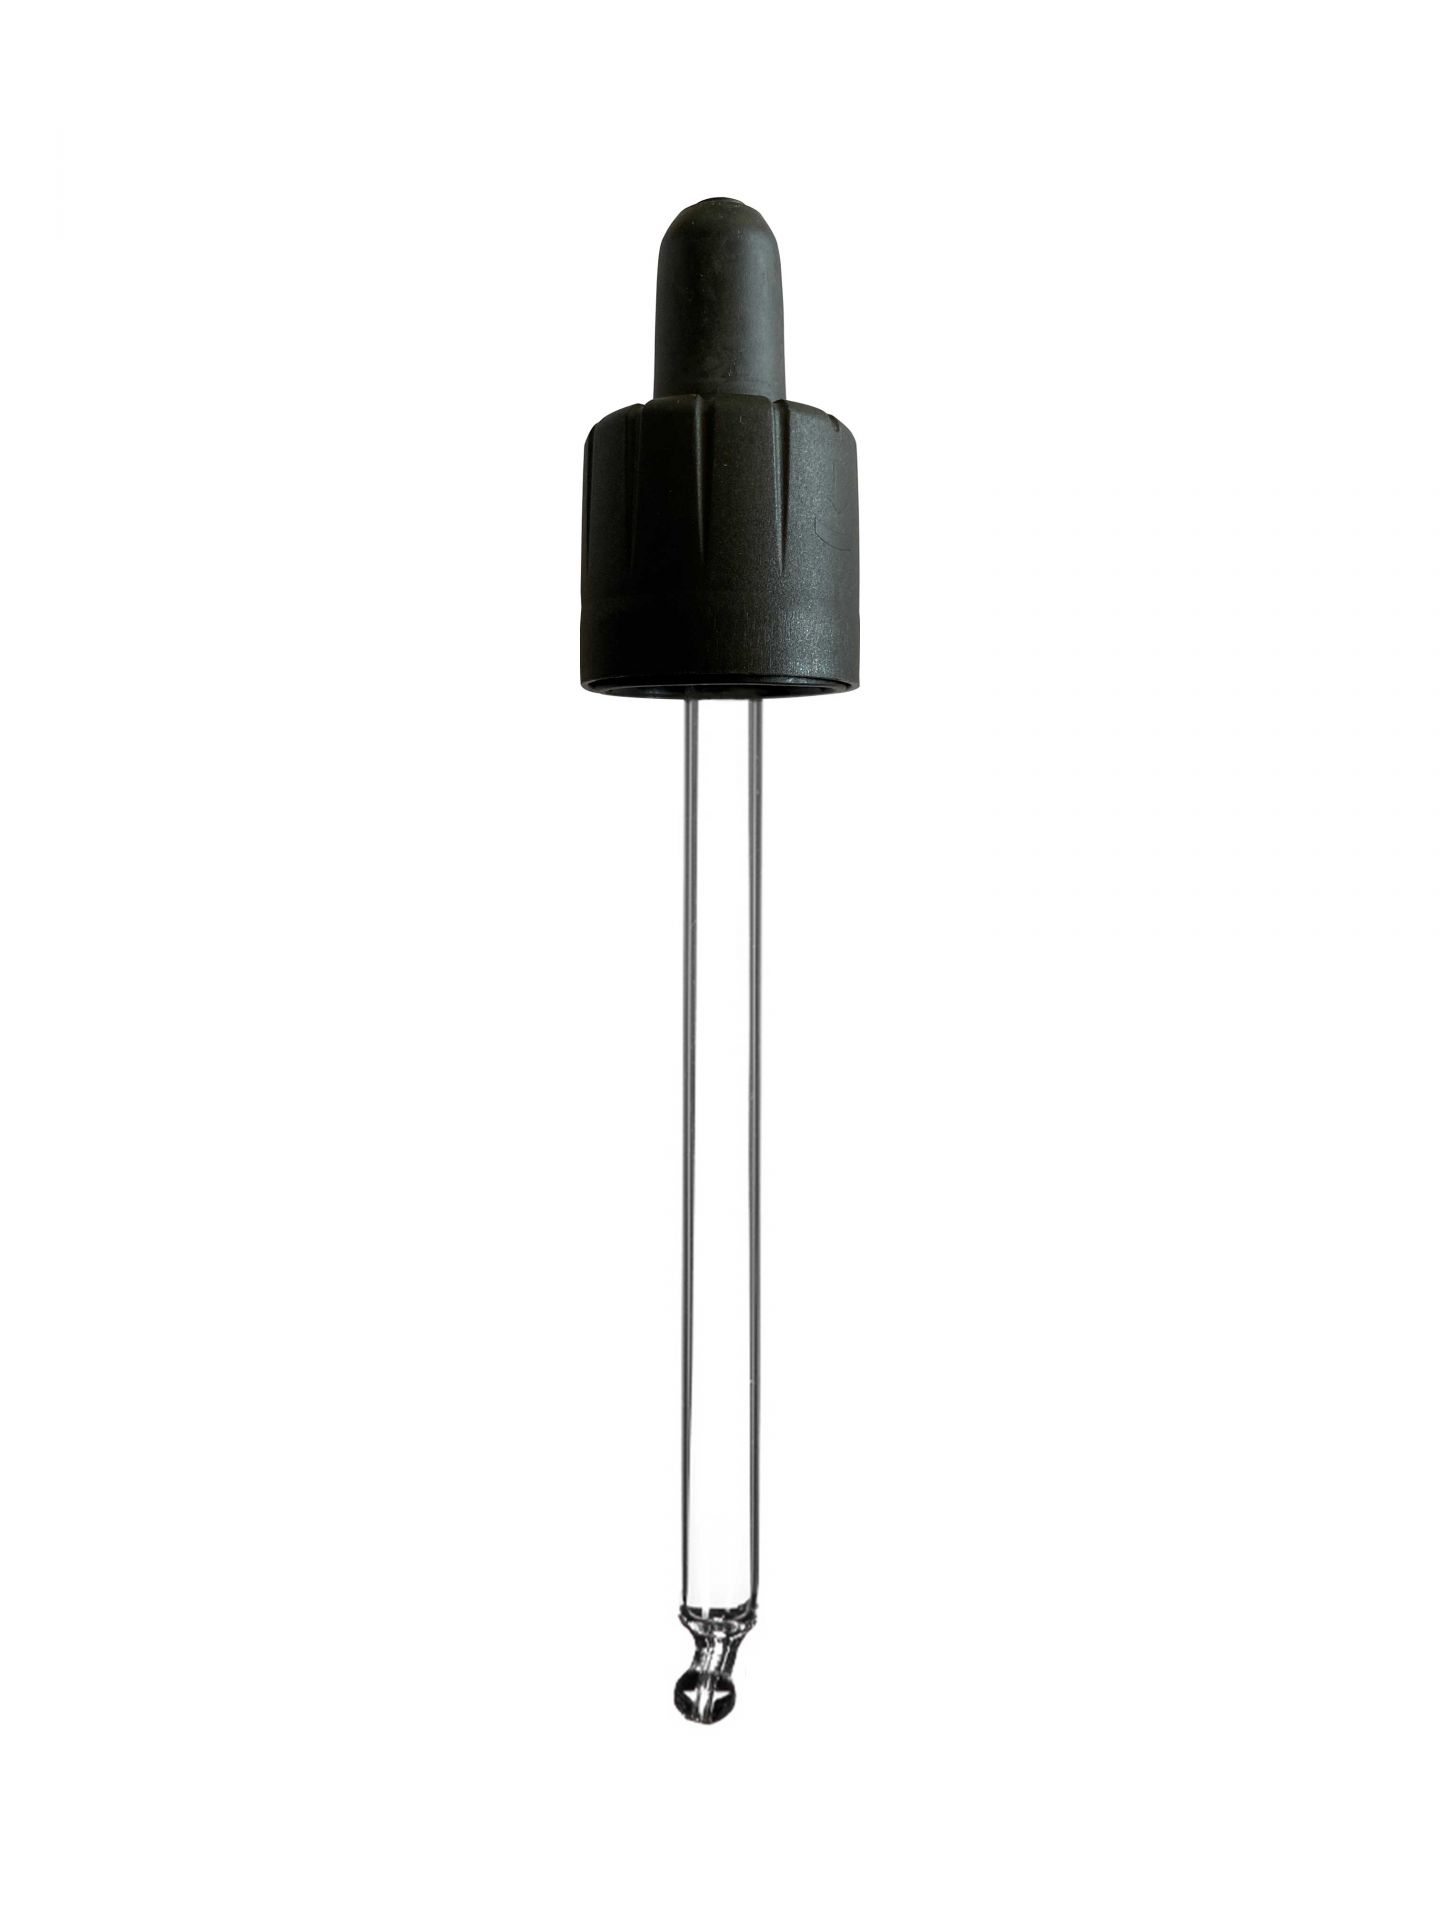 Pipette child-tamper evident DIN18, II, black, bulb TPE, dose 0.7ml, bent ball tip (Orion 100)   